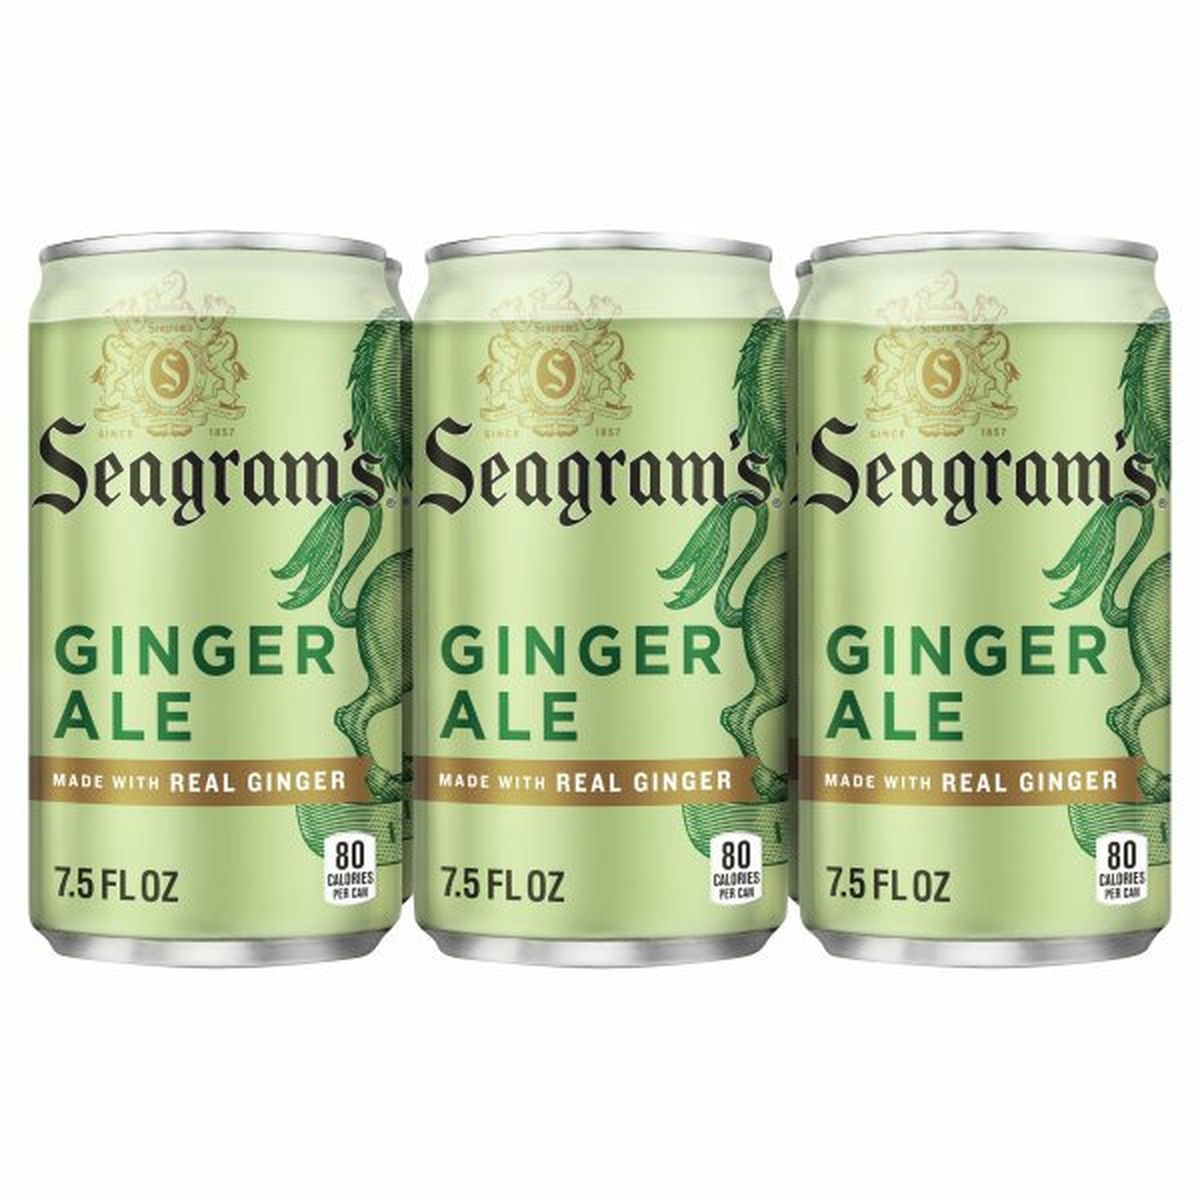 Calories in Seagram's Beer, Ginger Ale